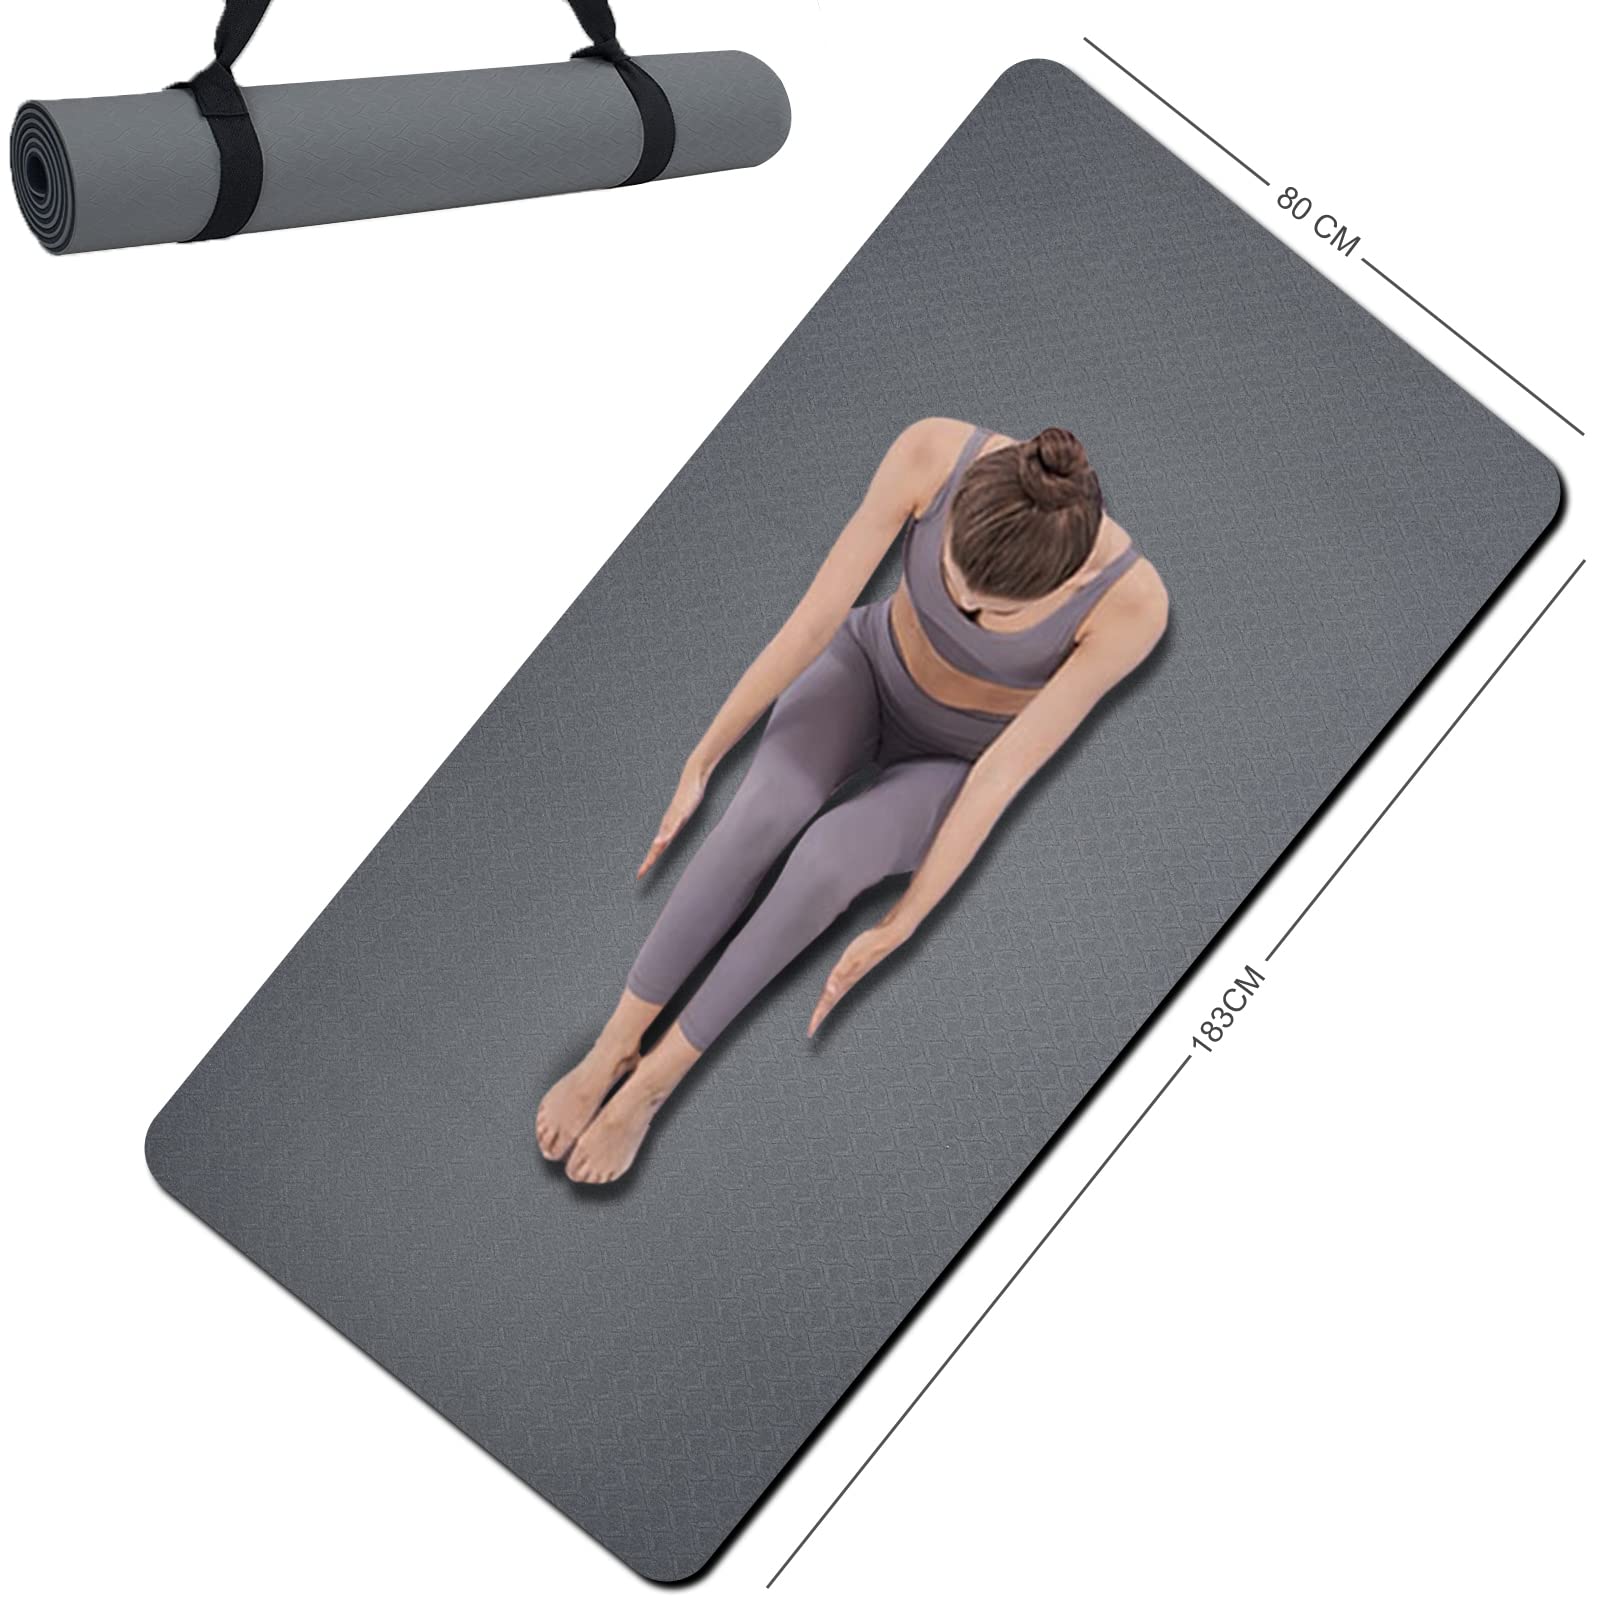 Thick Yoga Mat - Anti slip Gym Mat, Fitness Exercise Pad 